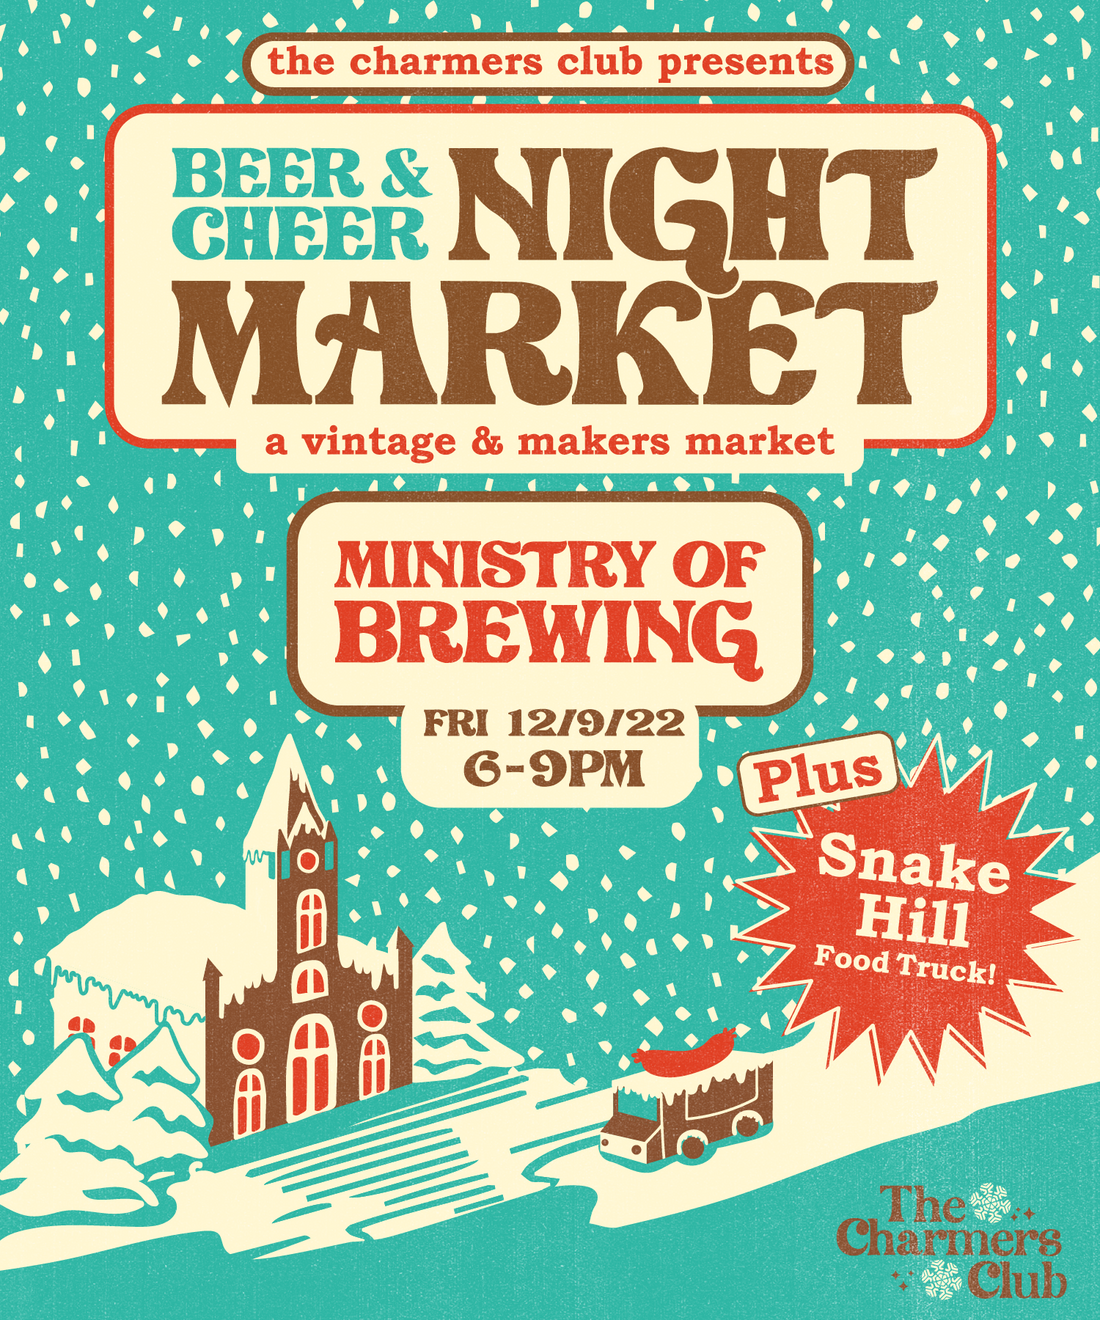 Beer & Cheer: A Night Market!